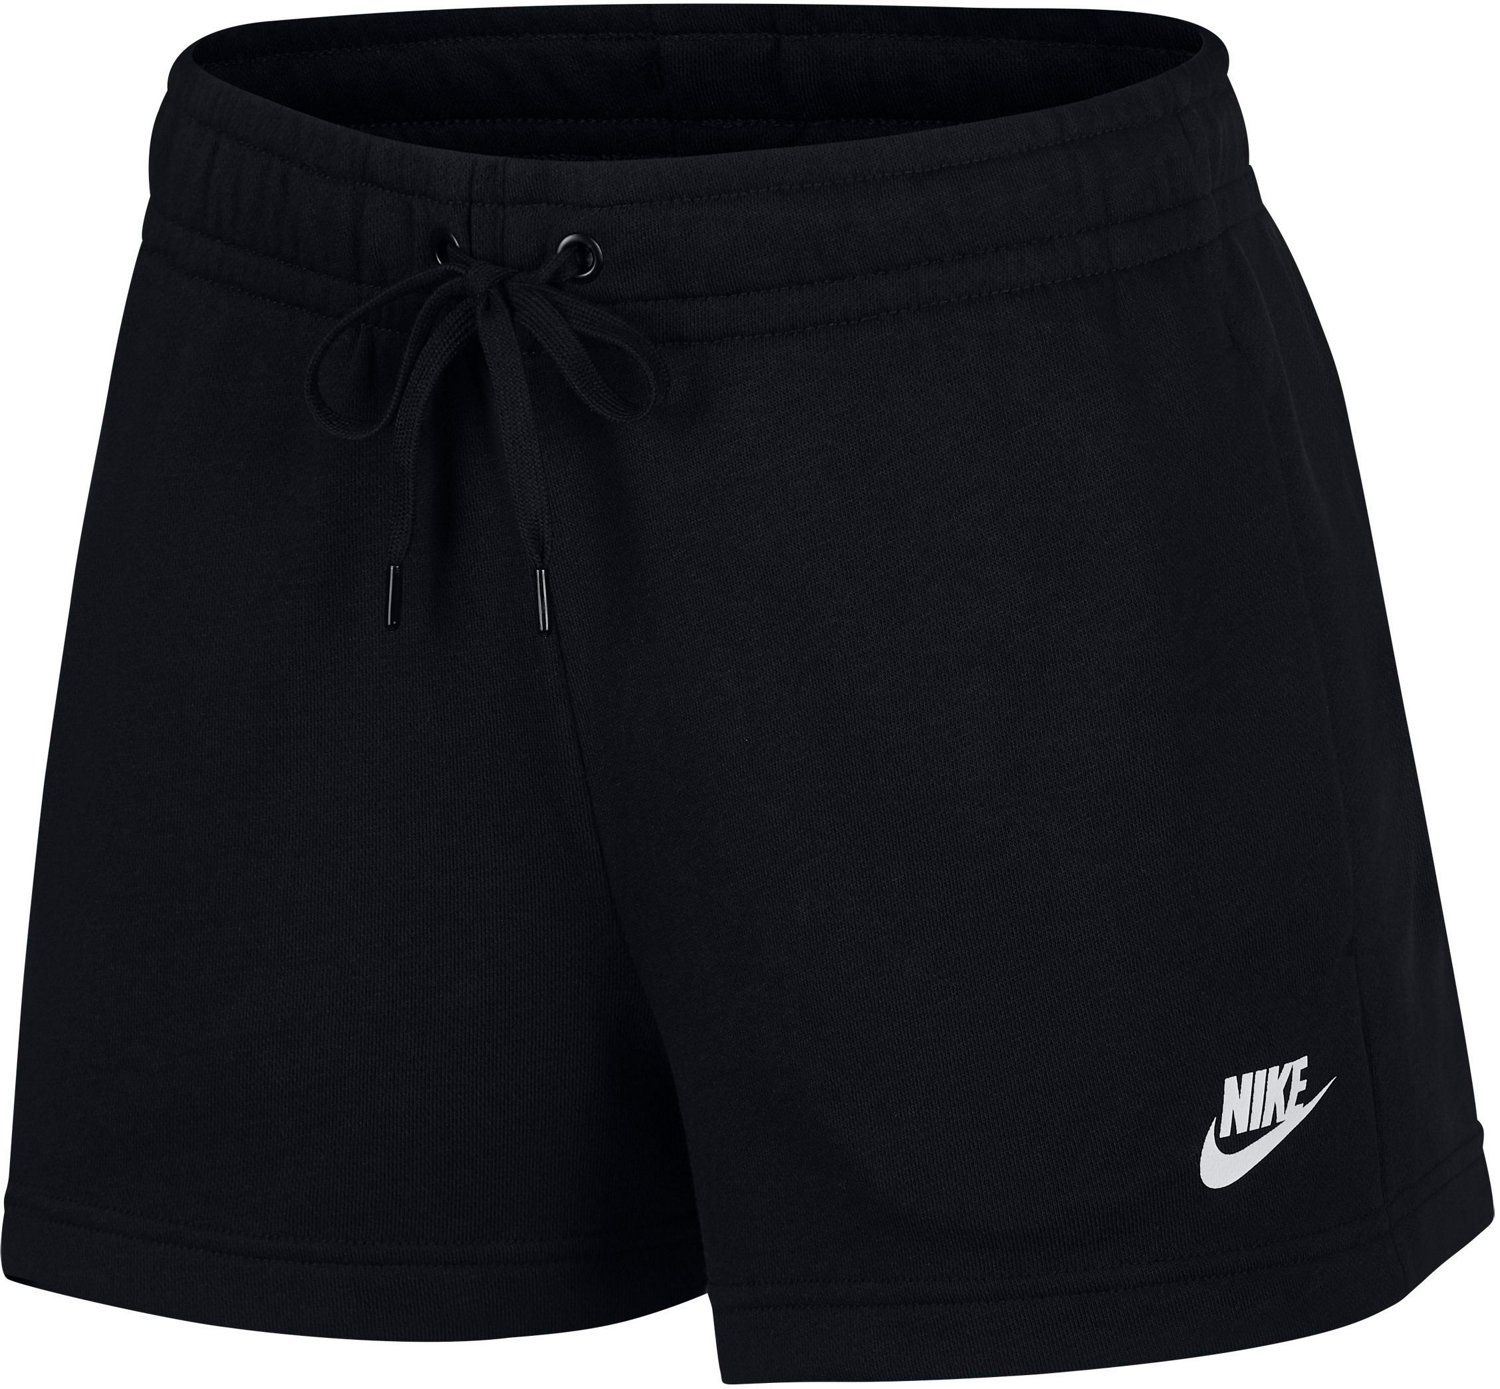 sports academy nike shorts